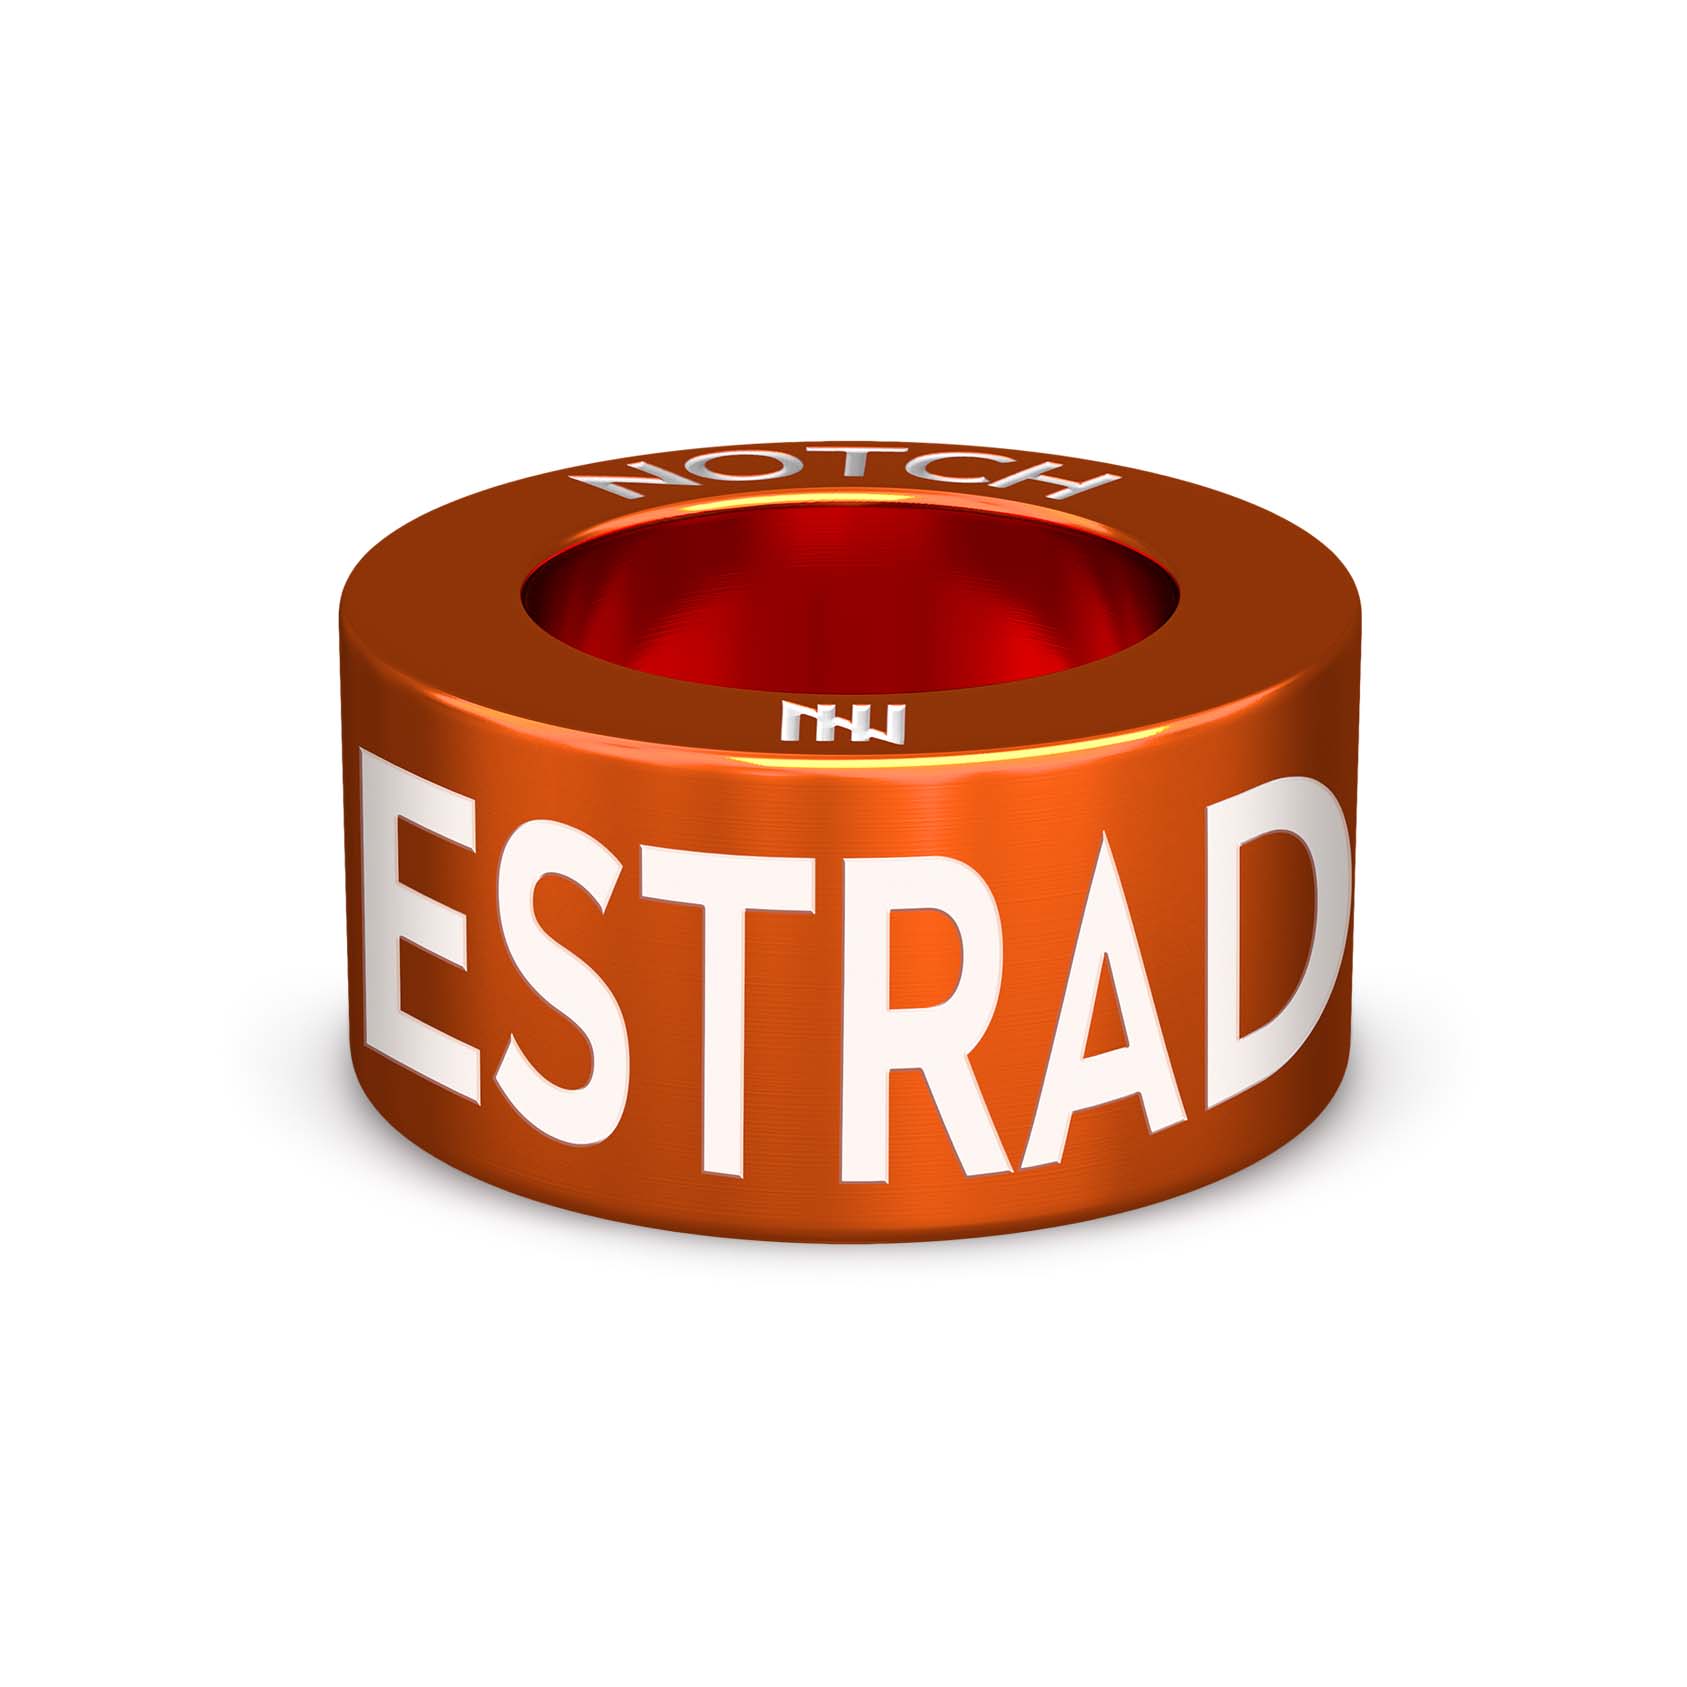 ESTRADA REAL 95 Miles NOTCH Charm